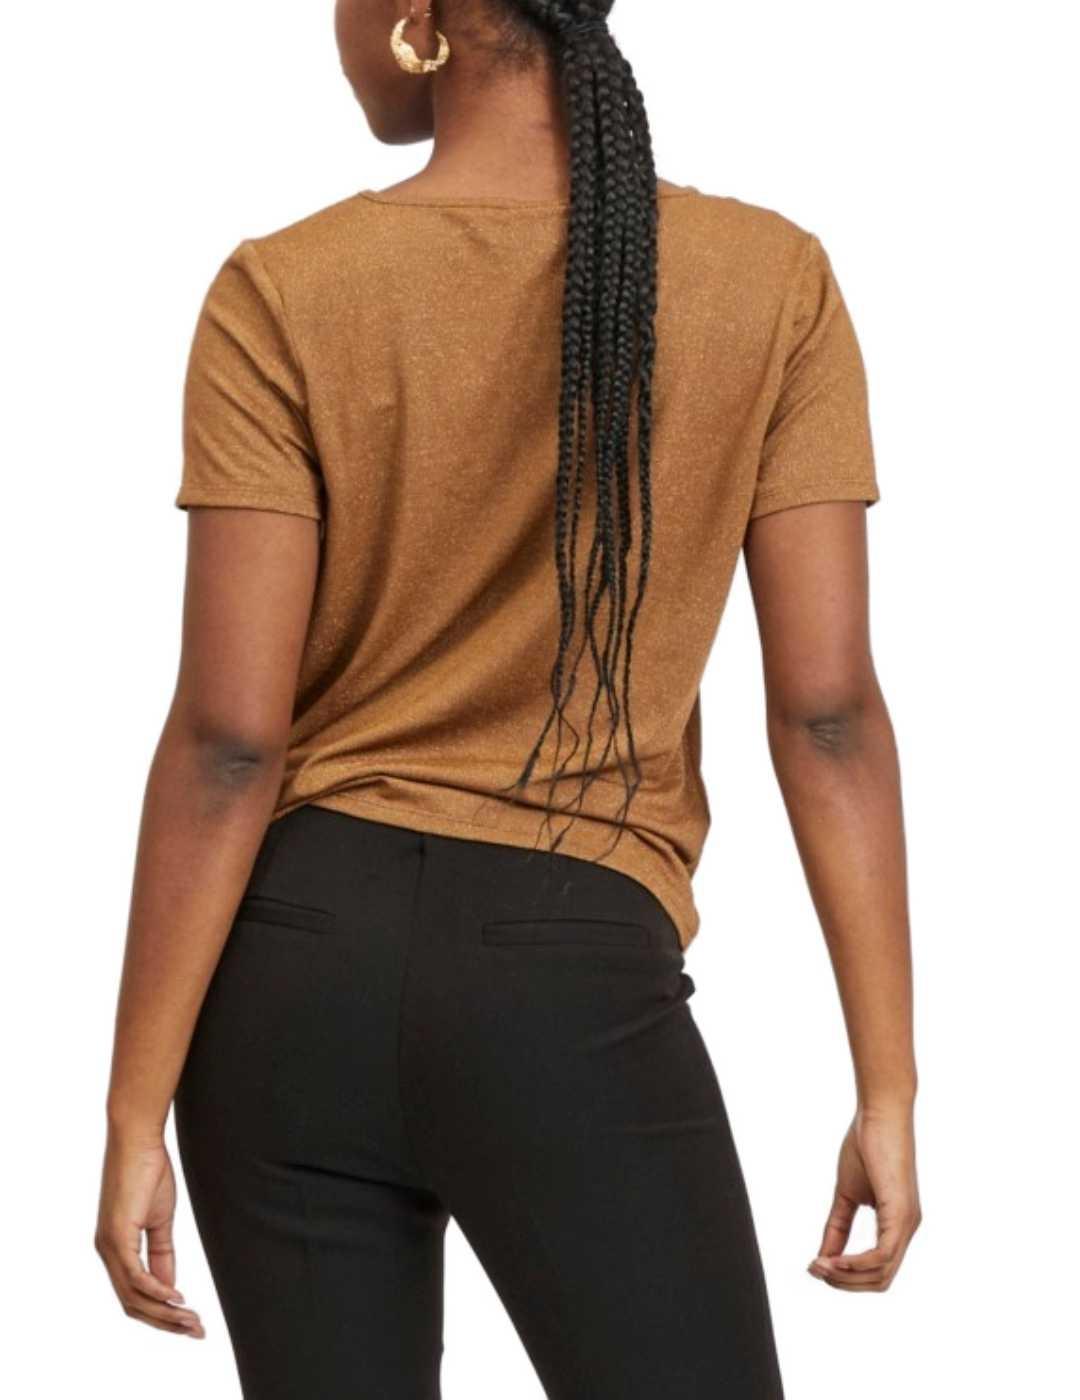 Camiseta Vila dorada cuello pico manga corta para mujer